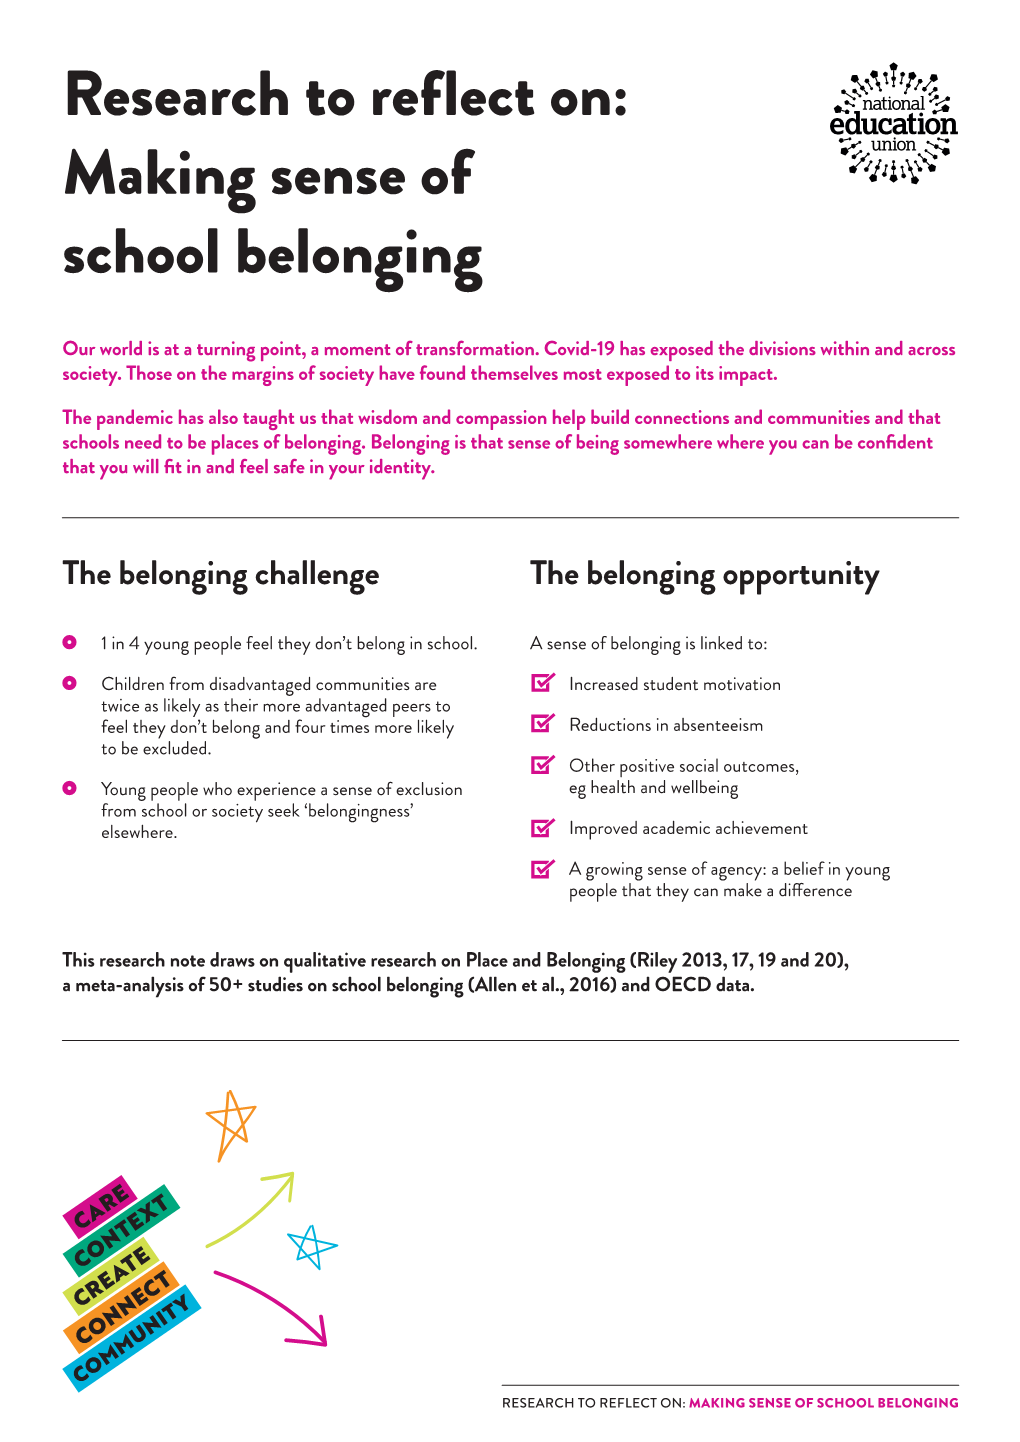 Research to Reflect On: Making Sense of School Belonging